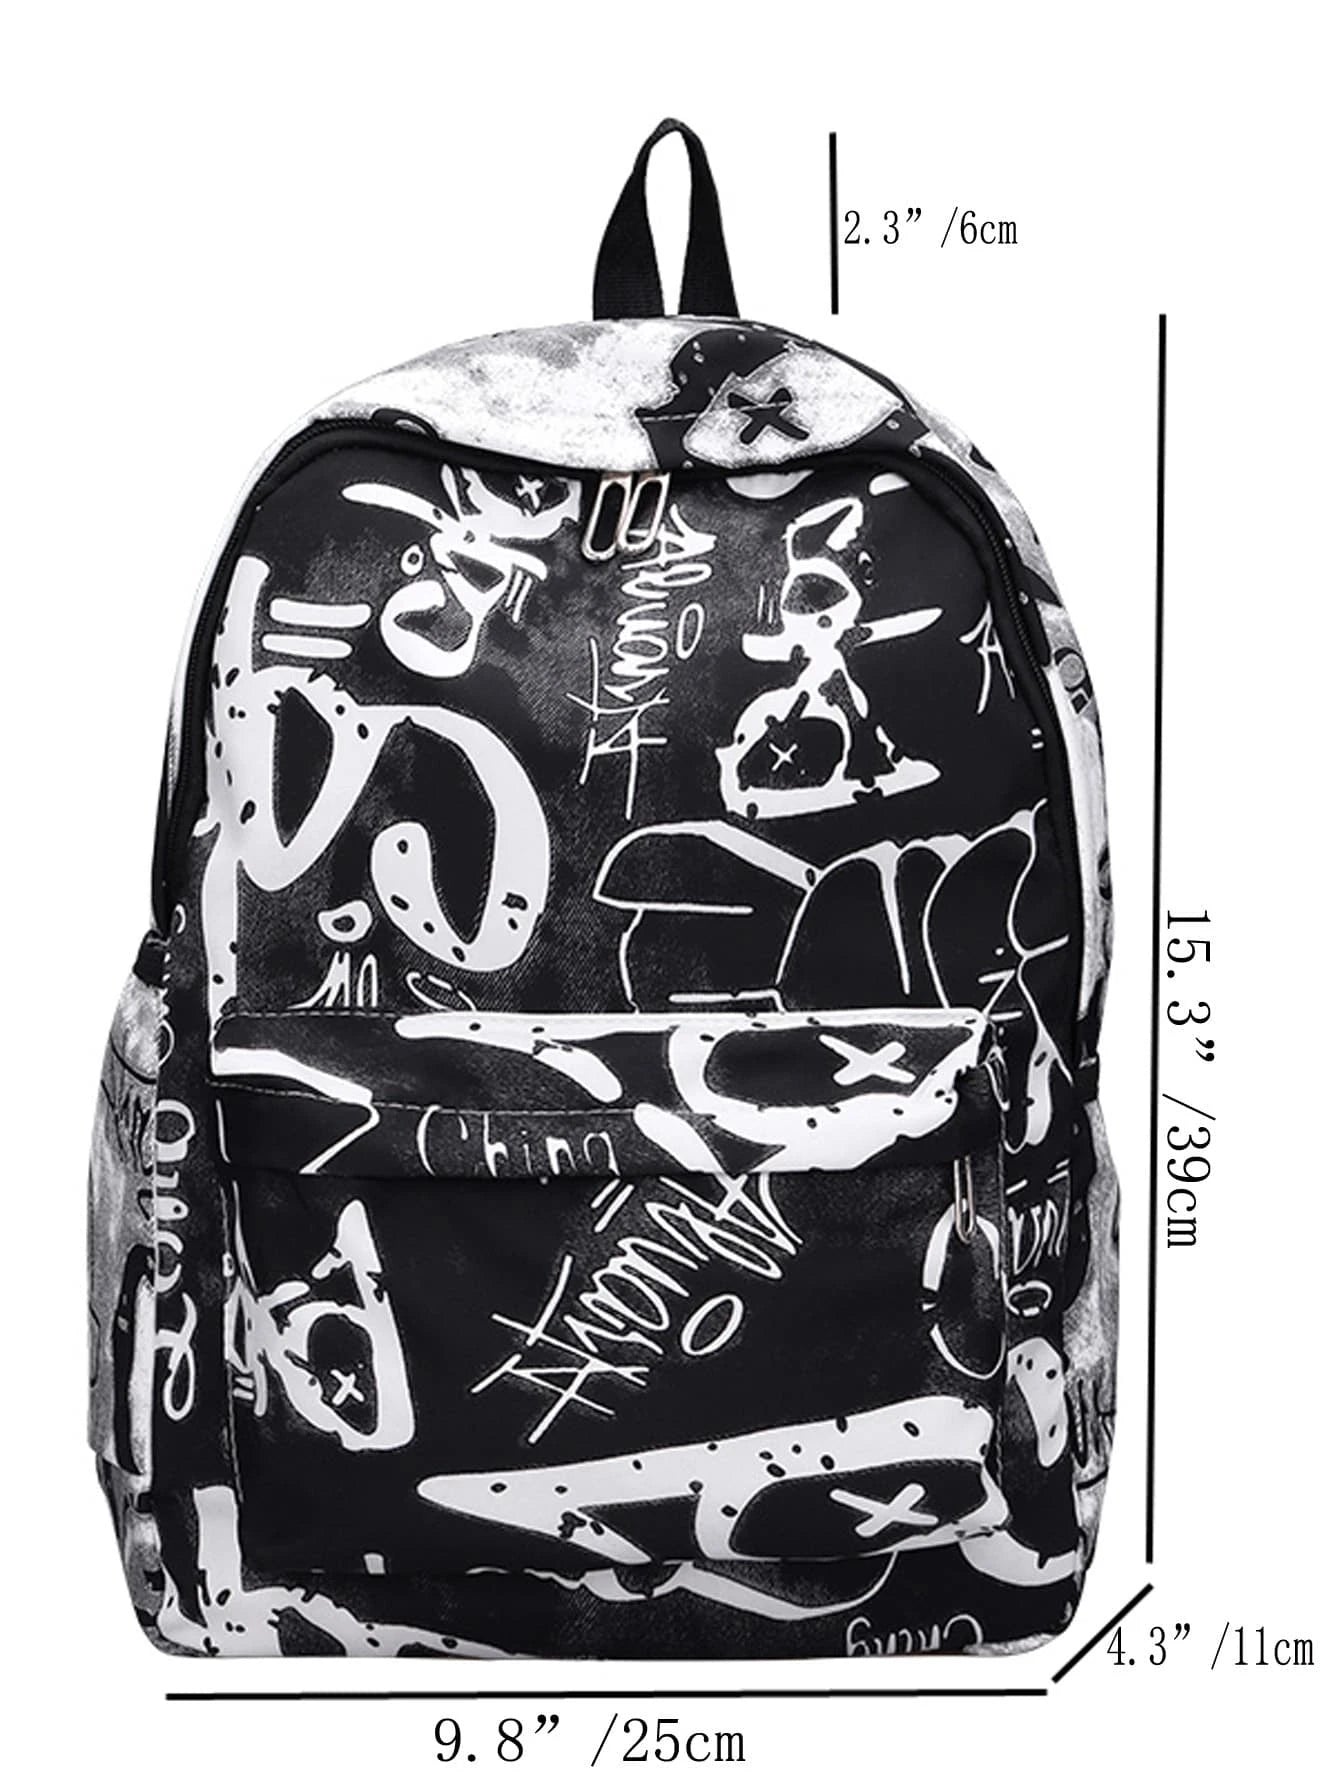 Waterproof,Lightweight Graffiti Print Functional Backpack School Bag For Graduate, Teen Girls